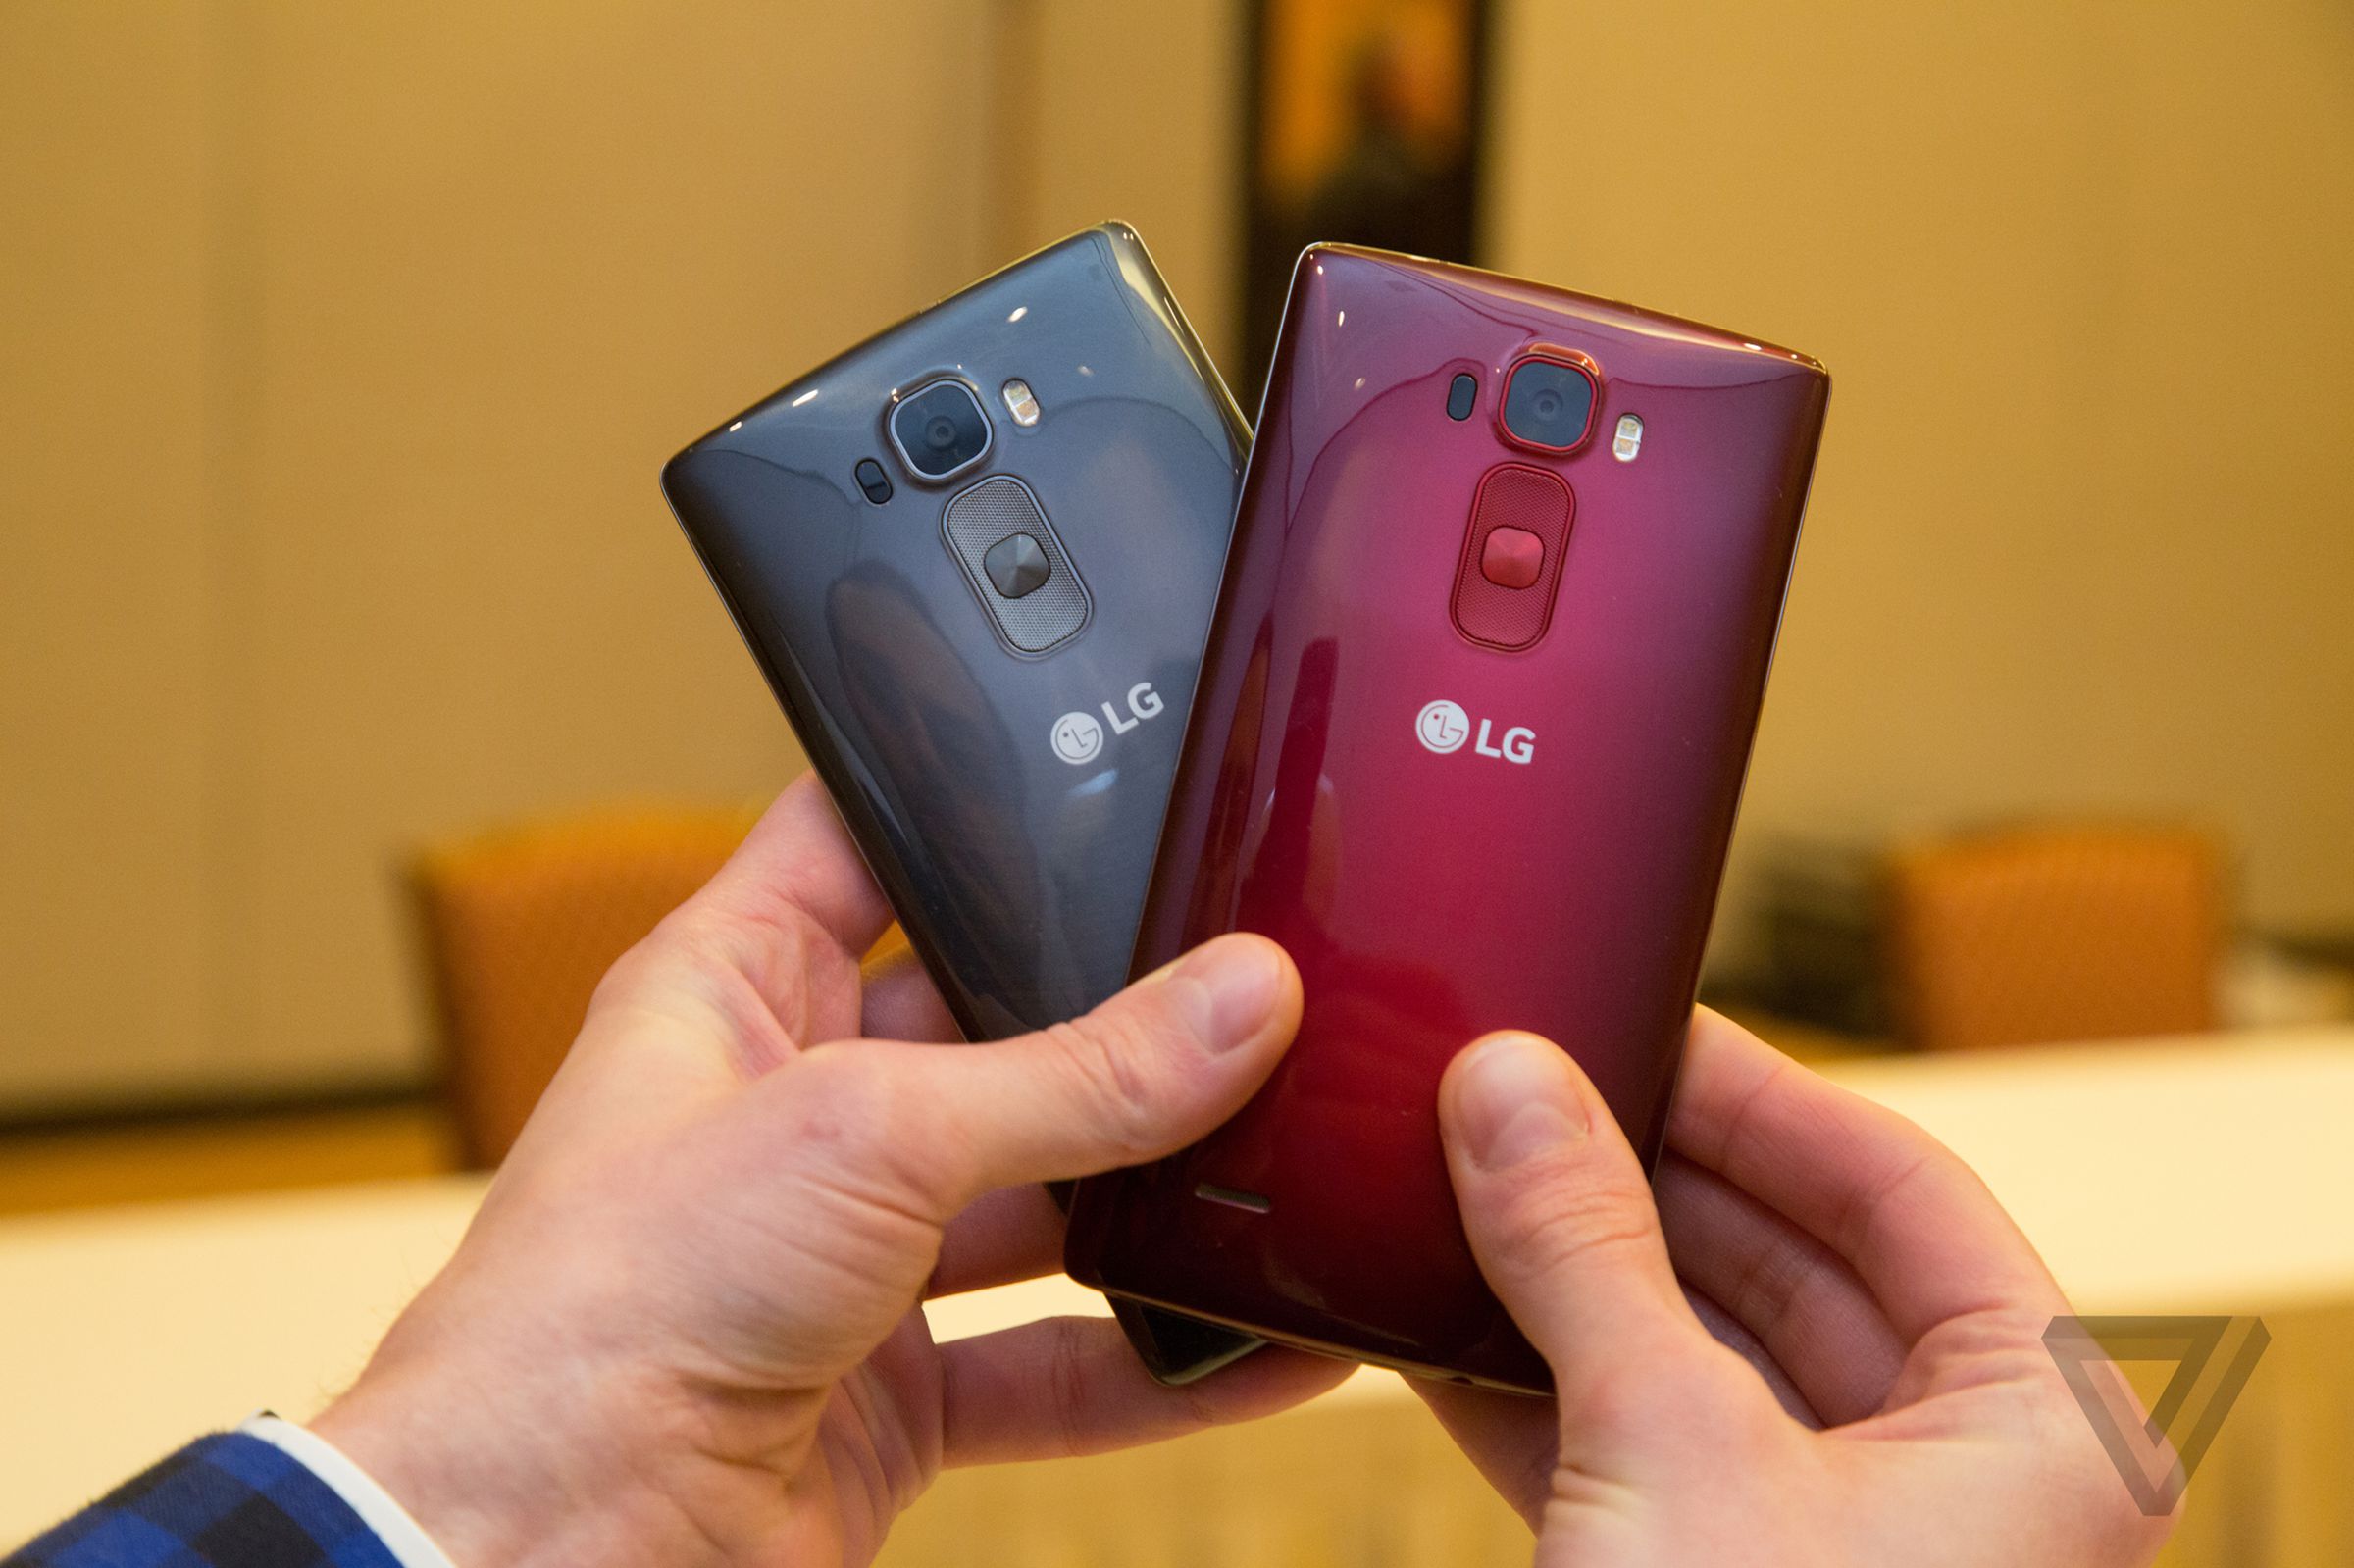 LG G Flex 2 hands-on photos